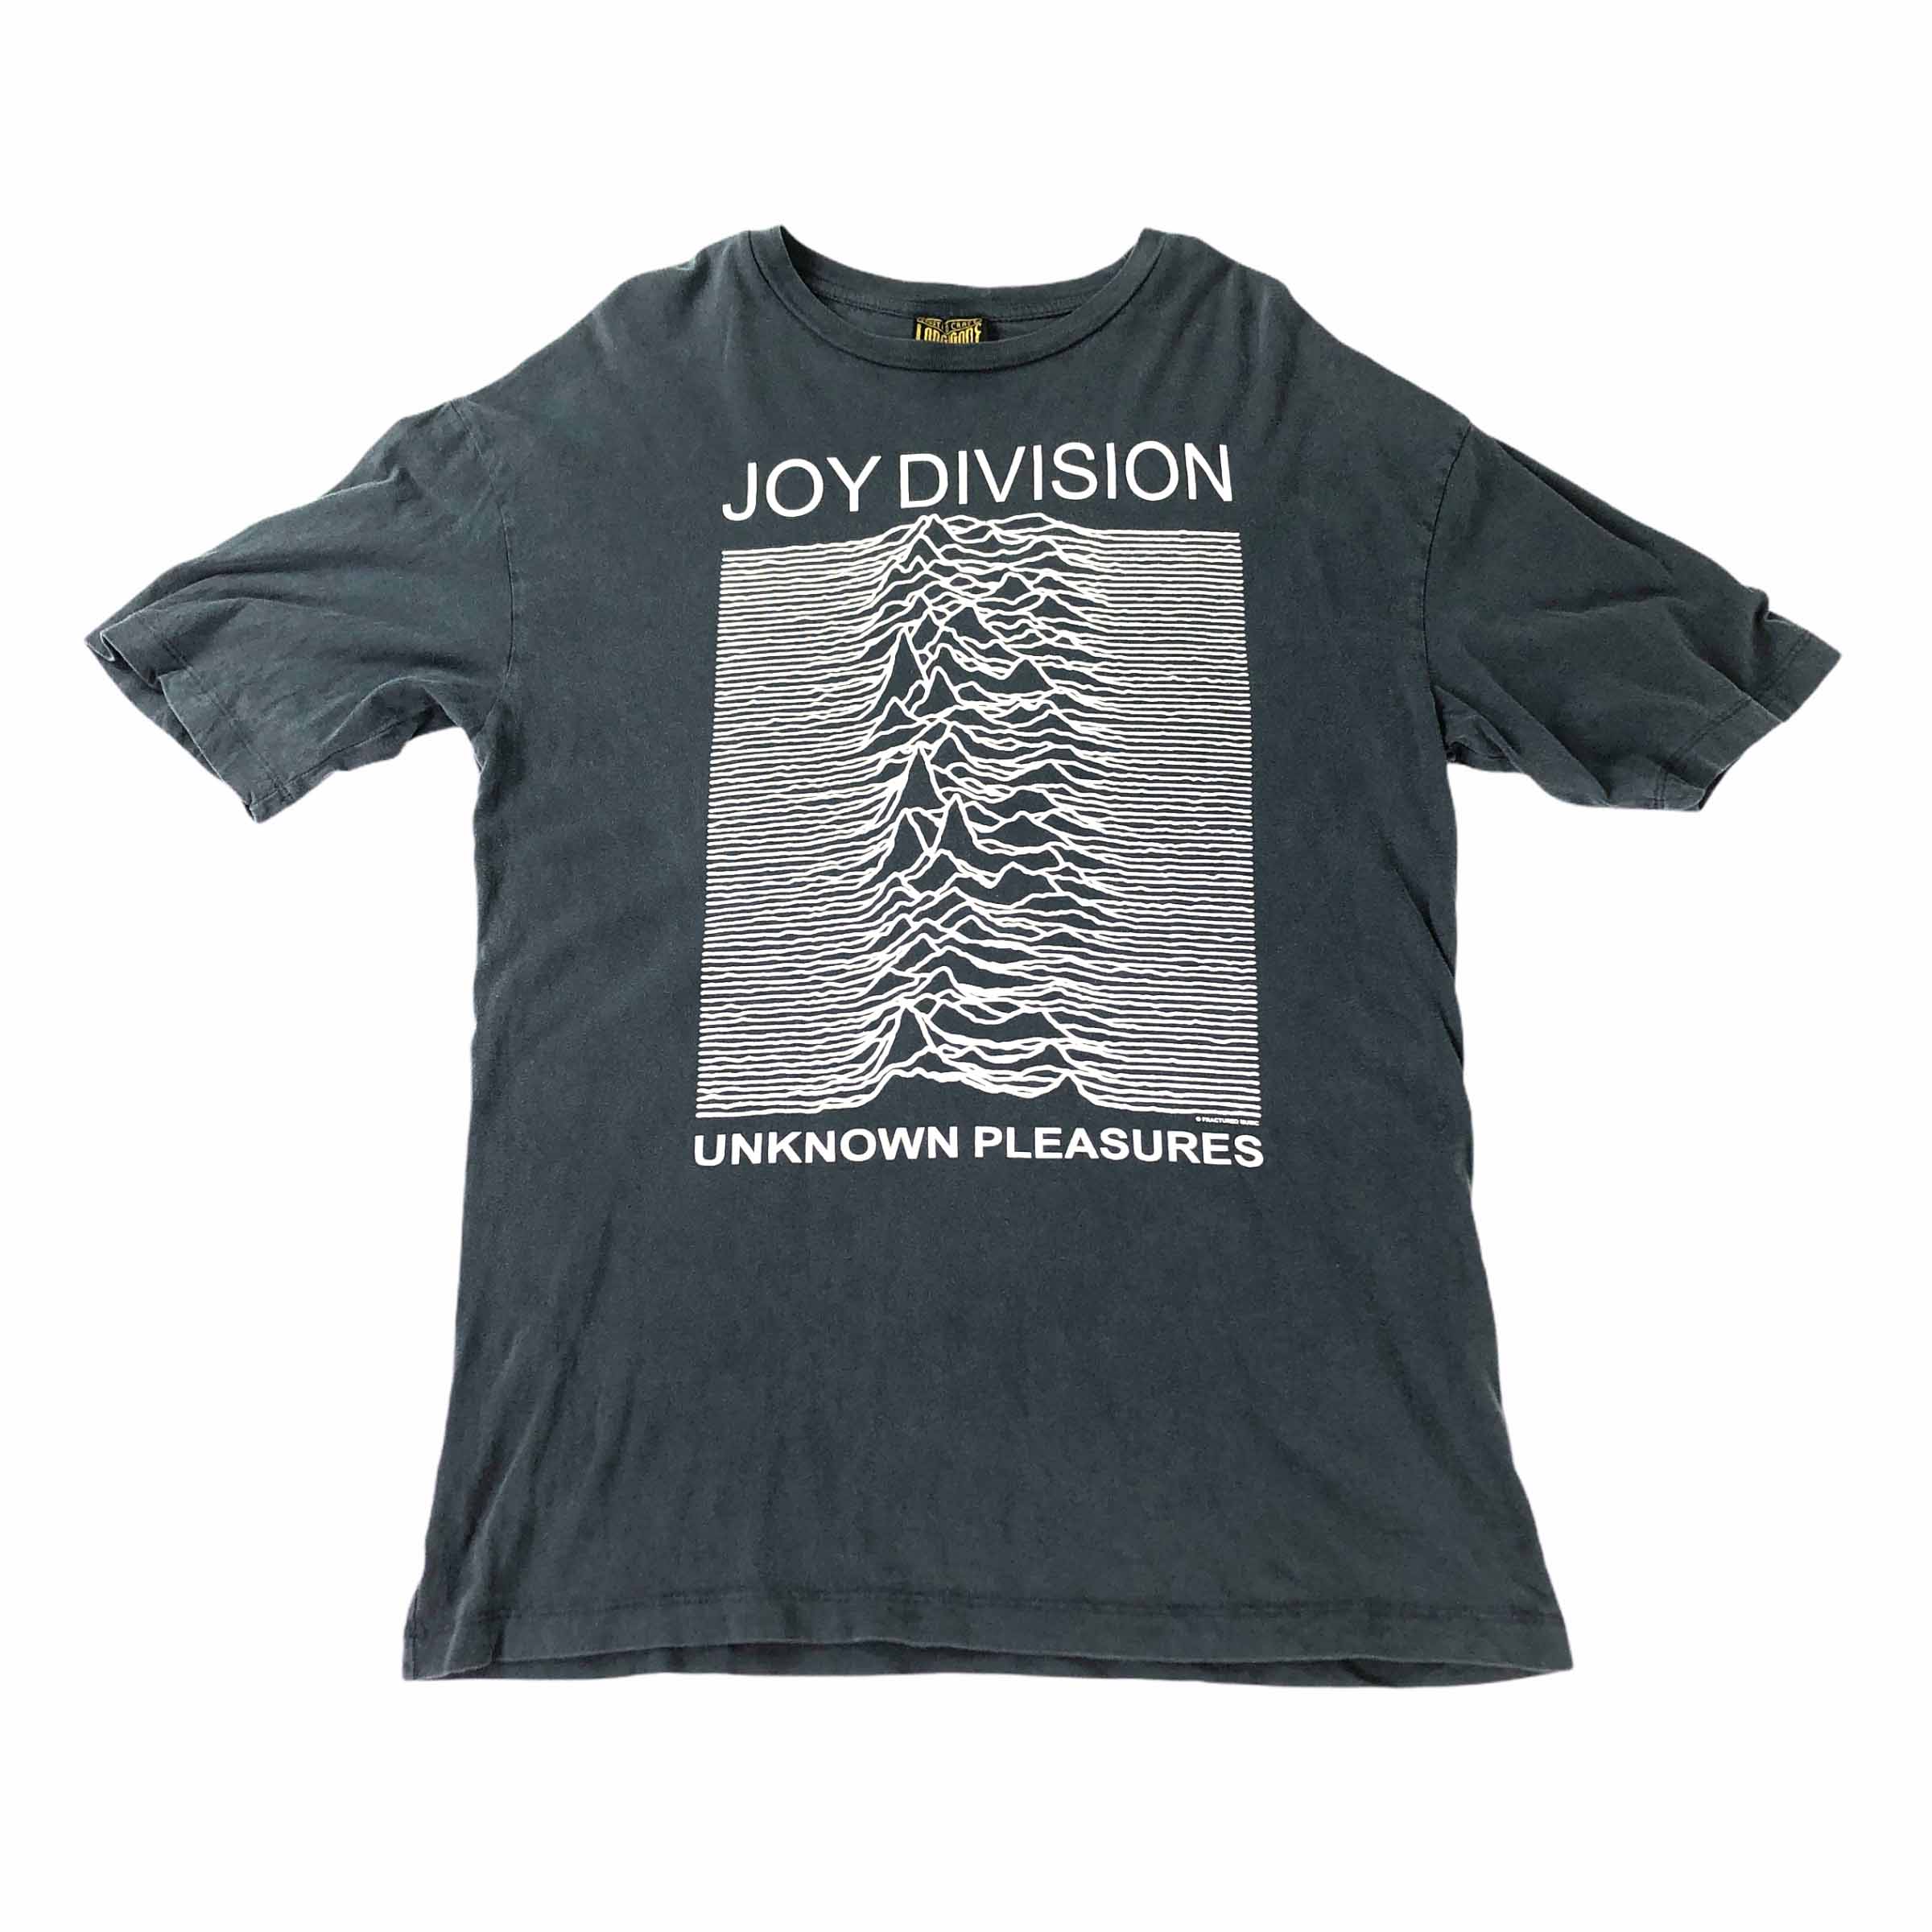 [Vintage] Joy Division Tshirt - Size S